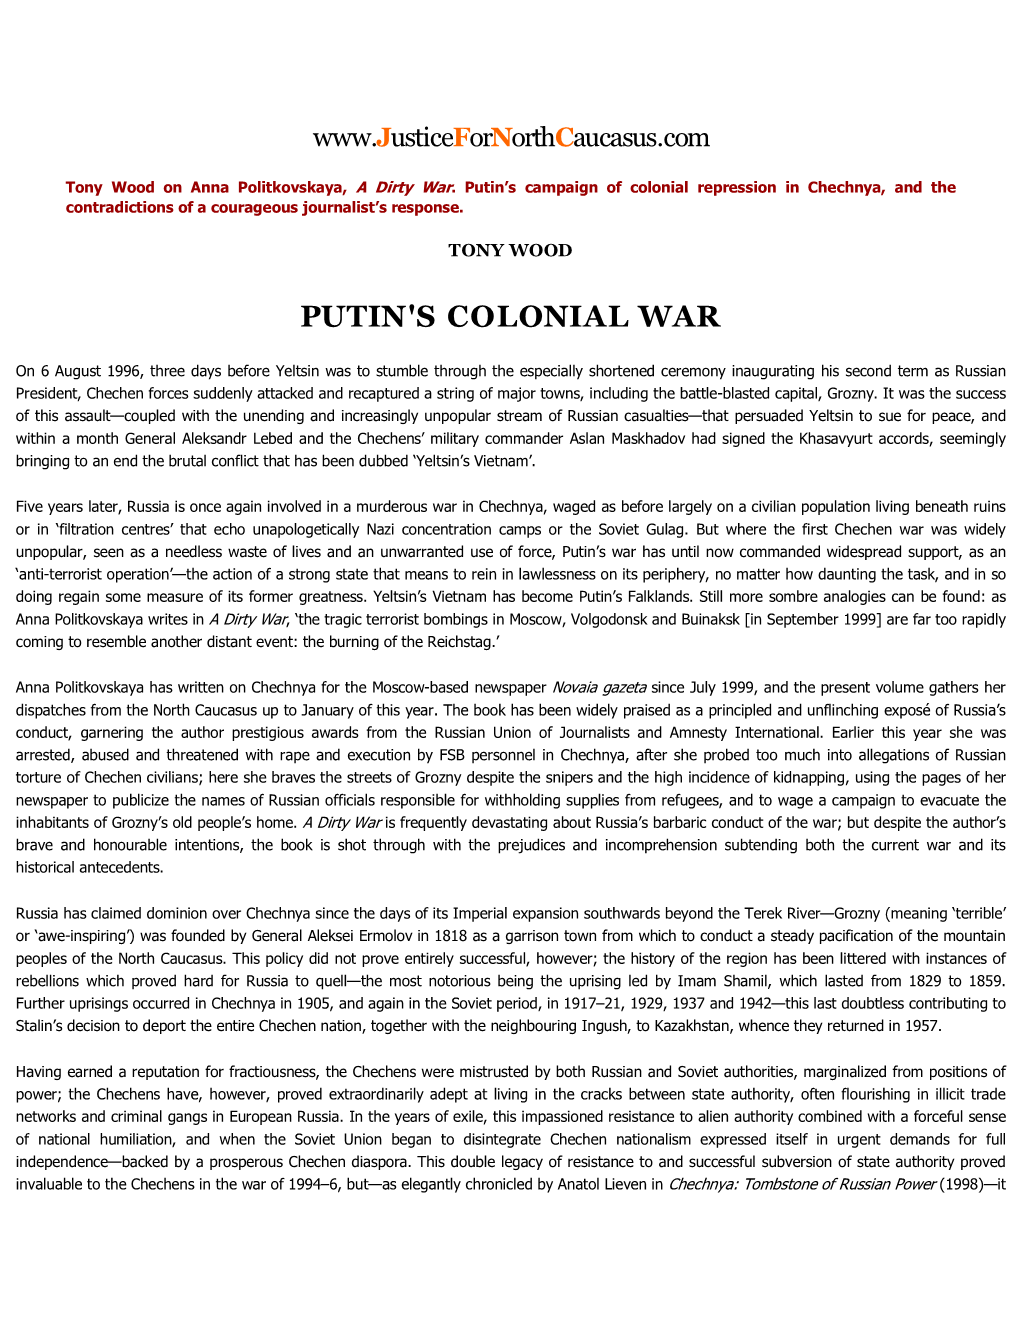 Putin's Colonial War